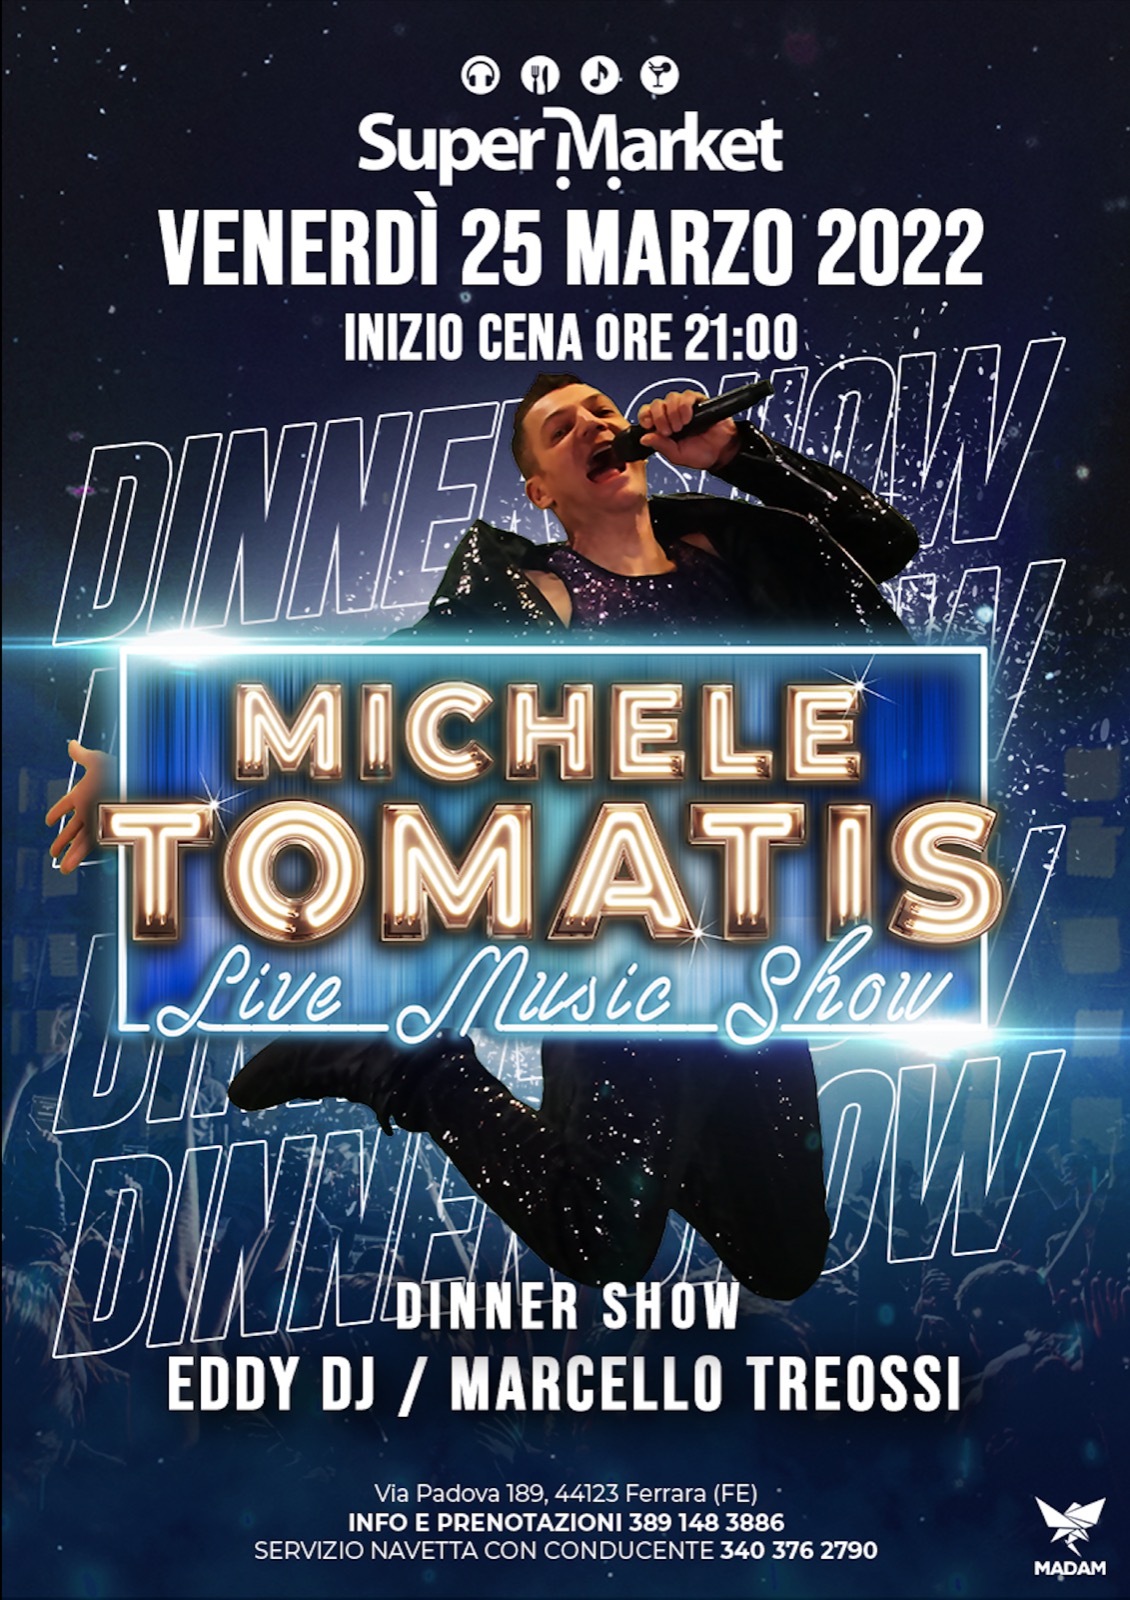 SuperMarket venerdì 25 marzo 2022 – Michele Tomatis